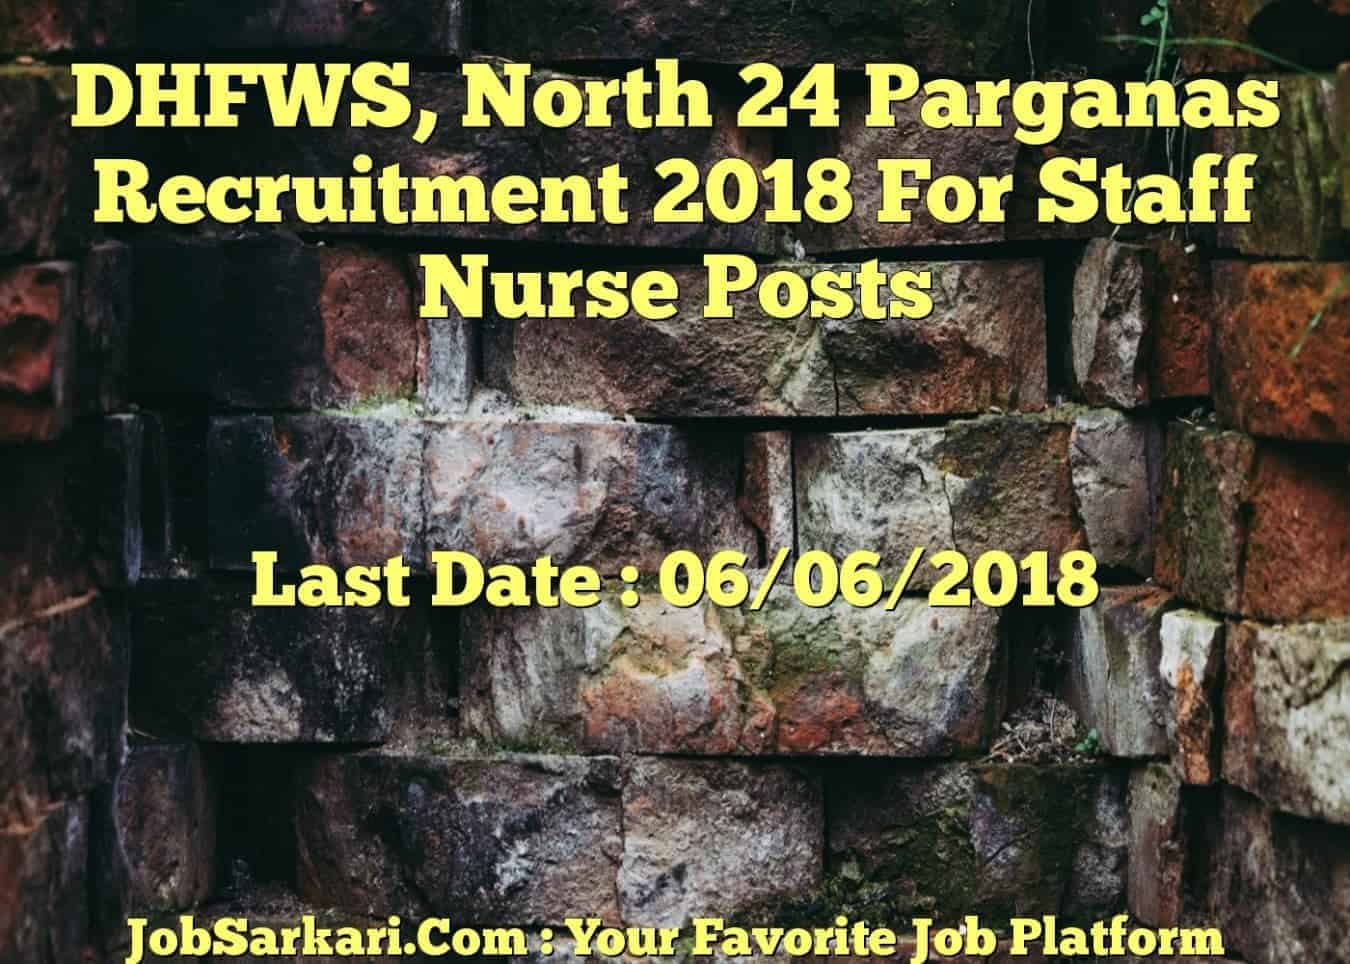 DHFWS, North 24 Parganas Recruitment 2018 For Staff Nurse Posts